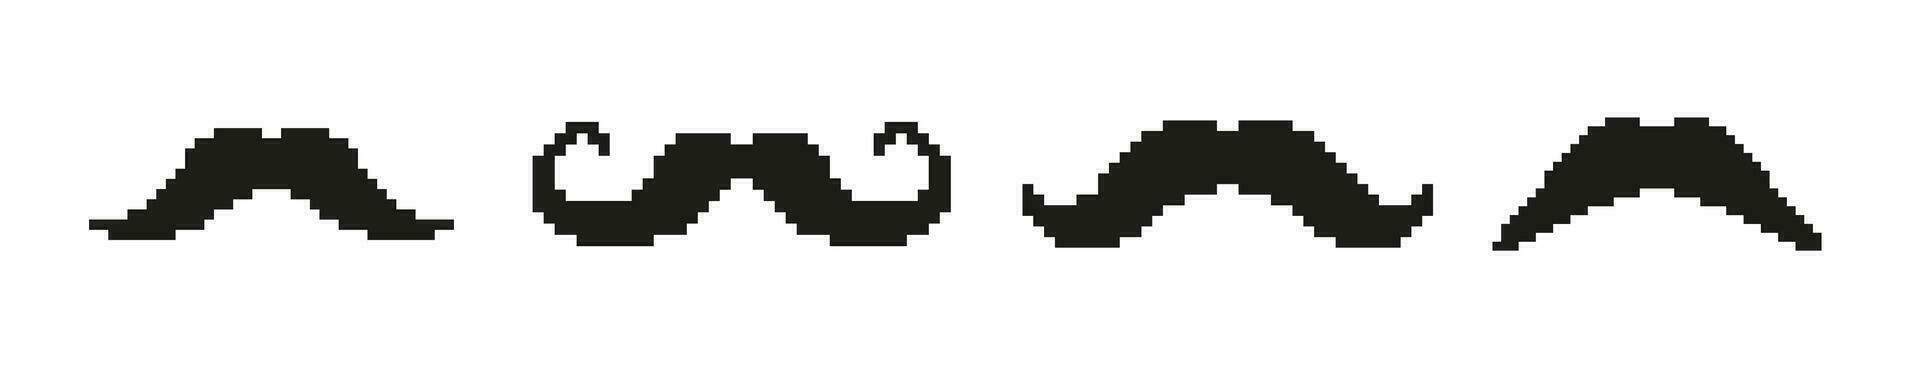 pixel bit mustasch man retro ikon. 8 bit gammal mustasch vektor